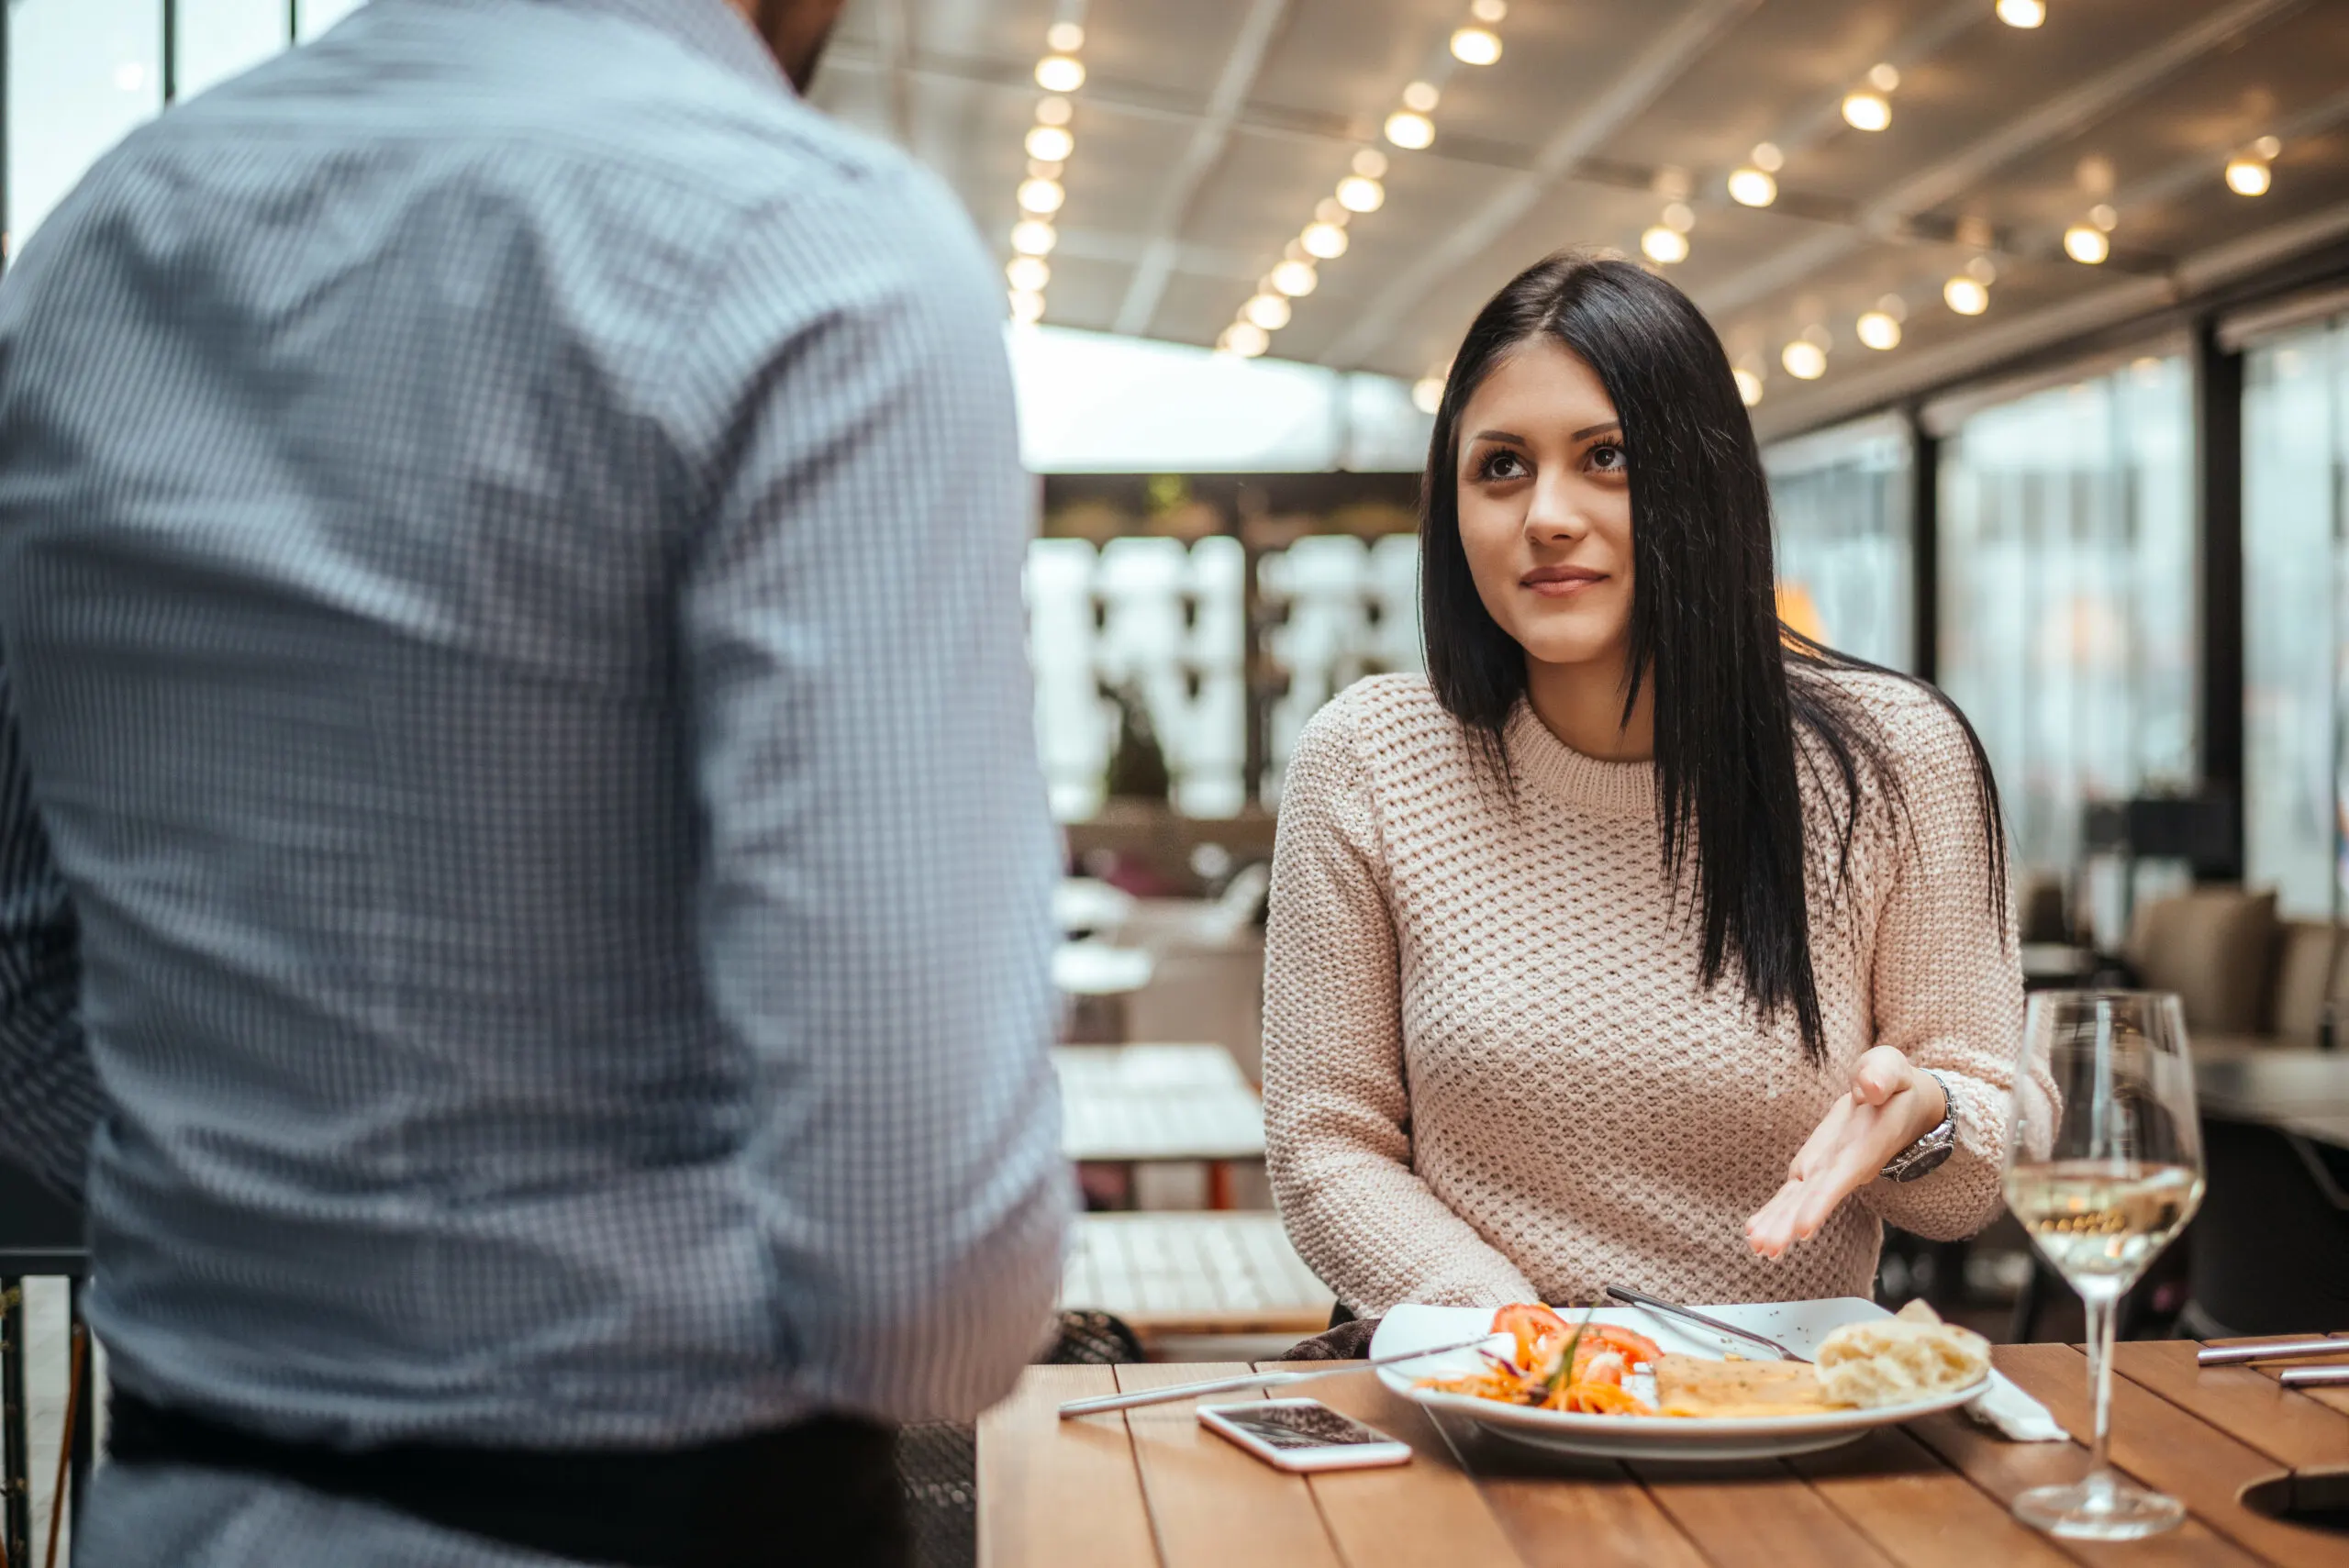 Disagreement between a waiter and a customer in a restaurant.